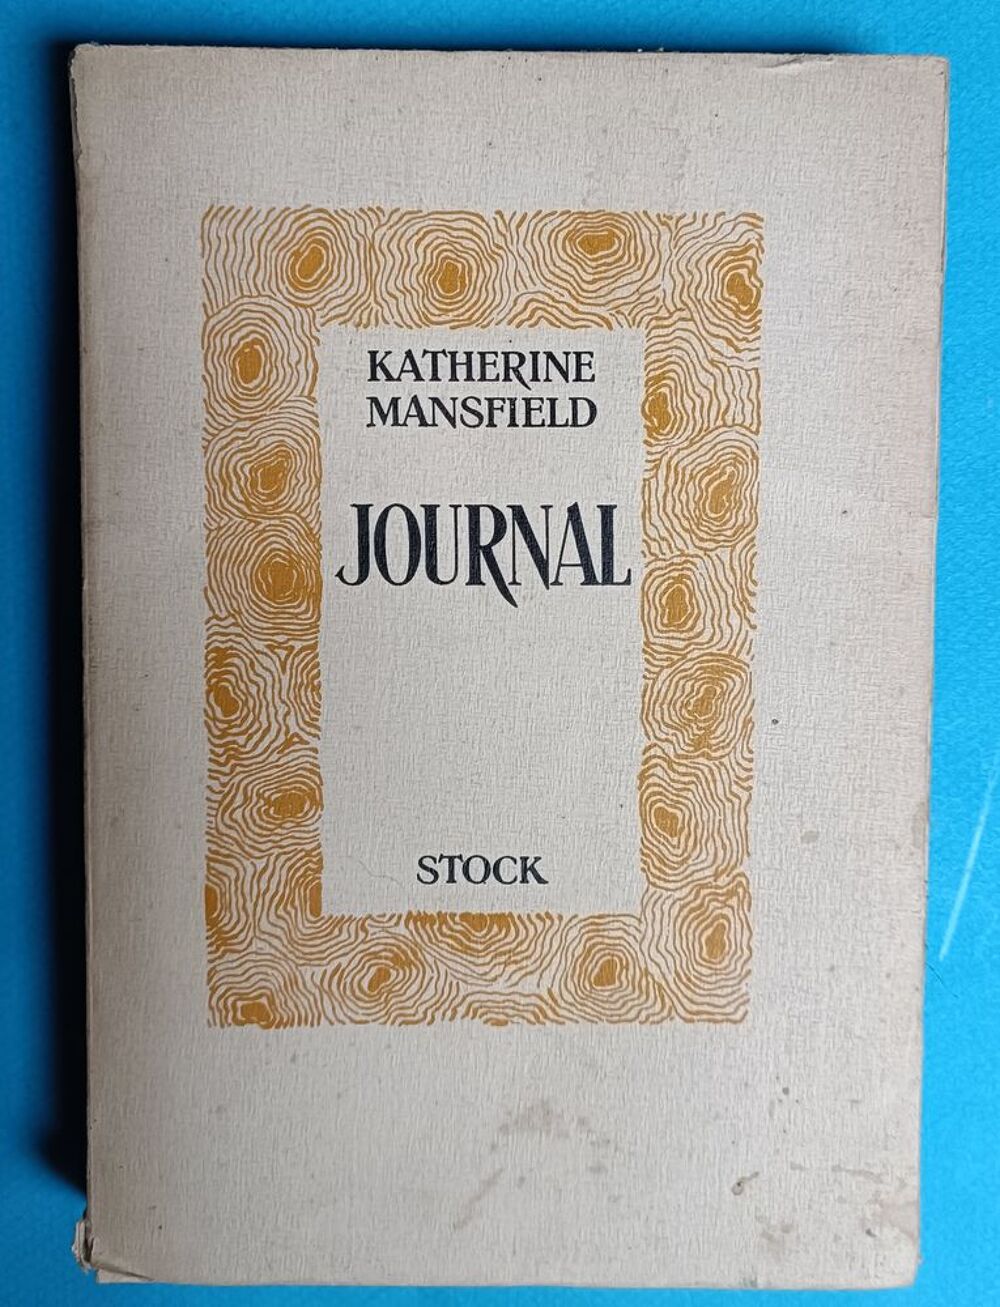 Katherine MANSFIELD : journal
Livres et BD